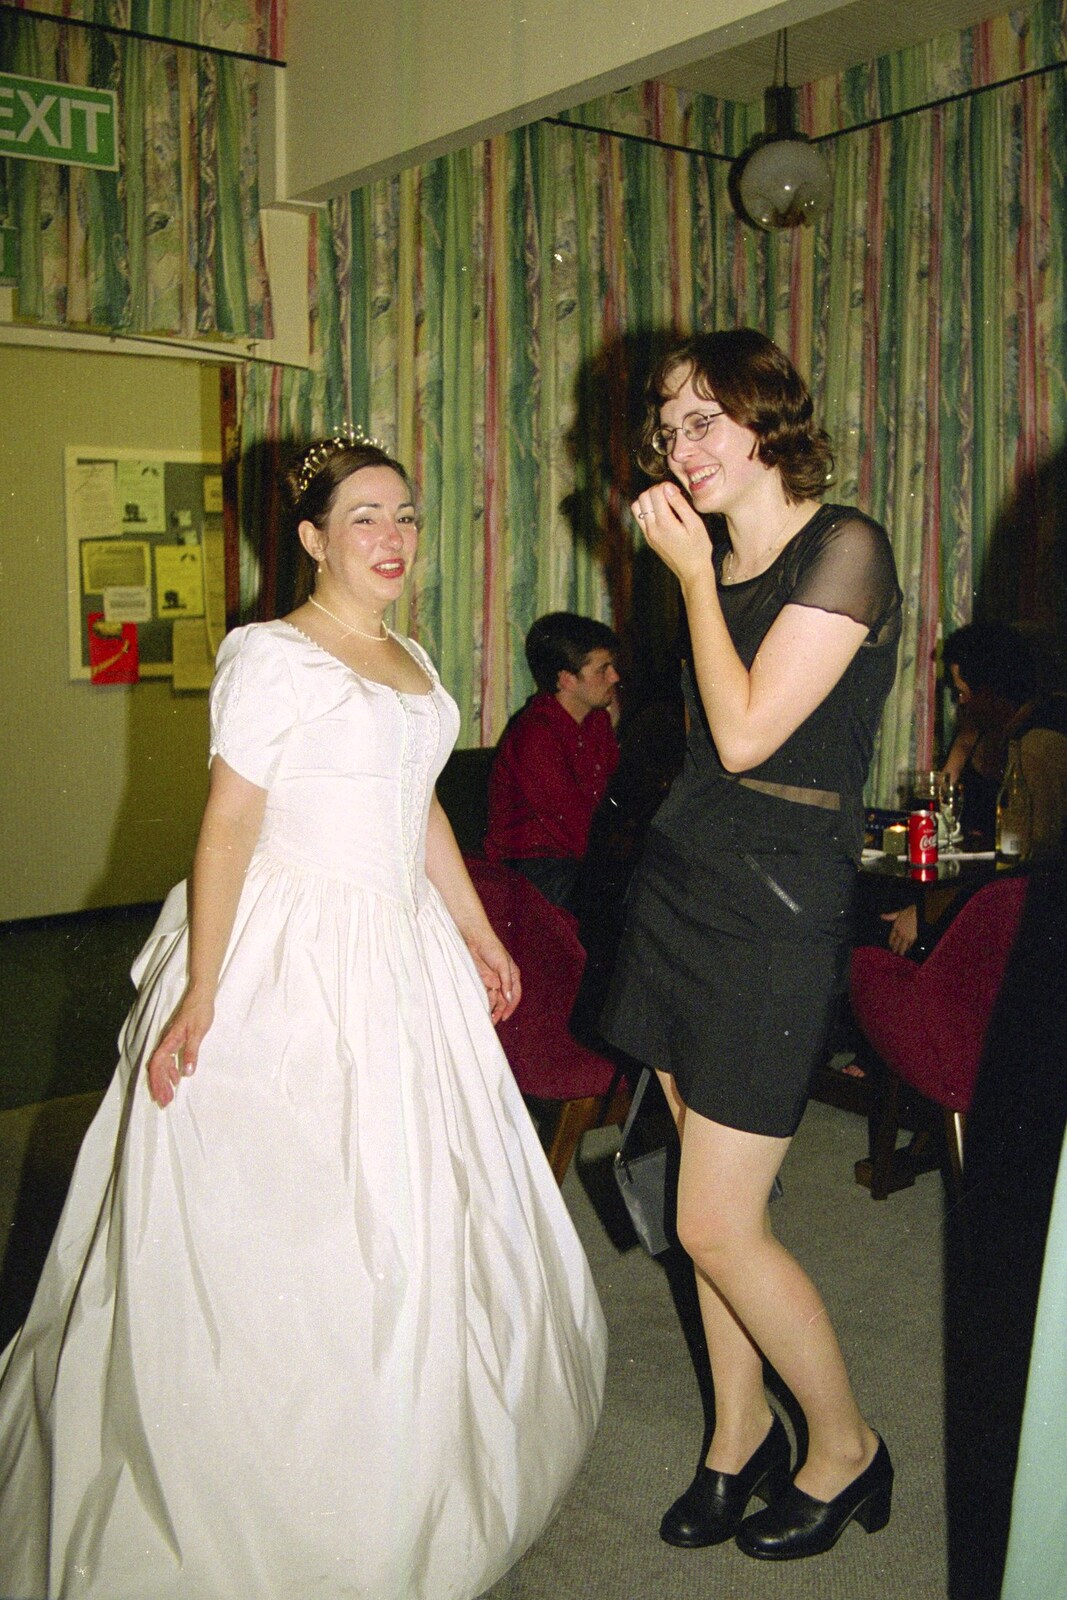 Lesley and Hannah from Joe and Lesley's CISU Wedding, Ipswich, Suffolk - 30th July 1998